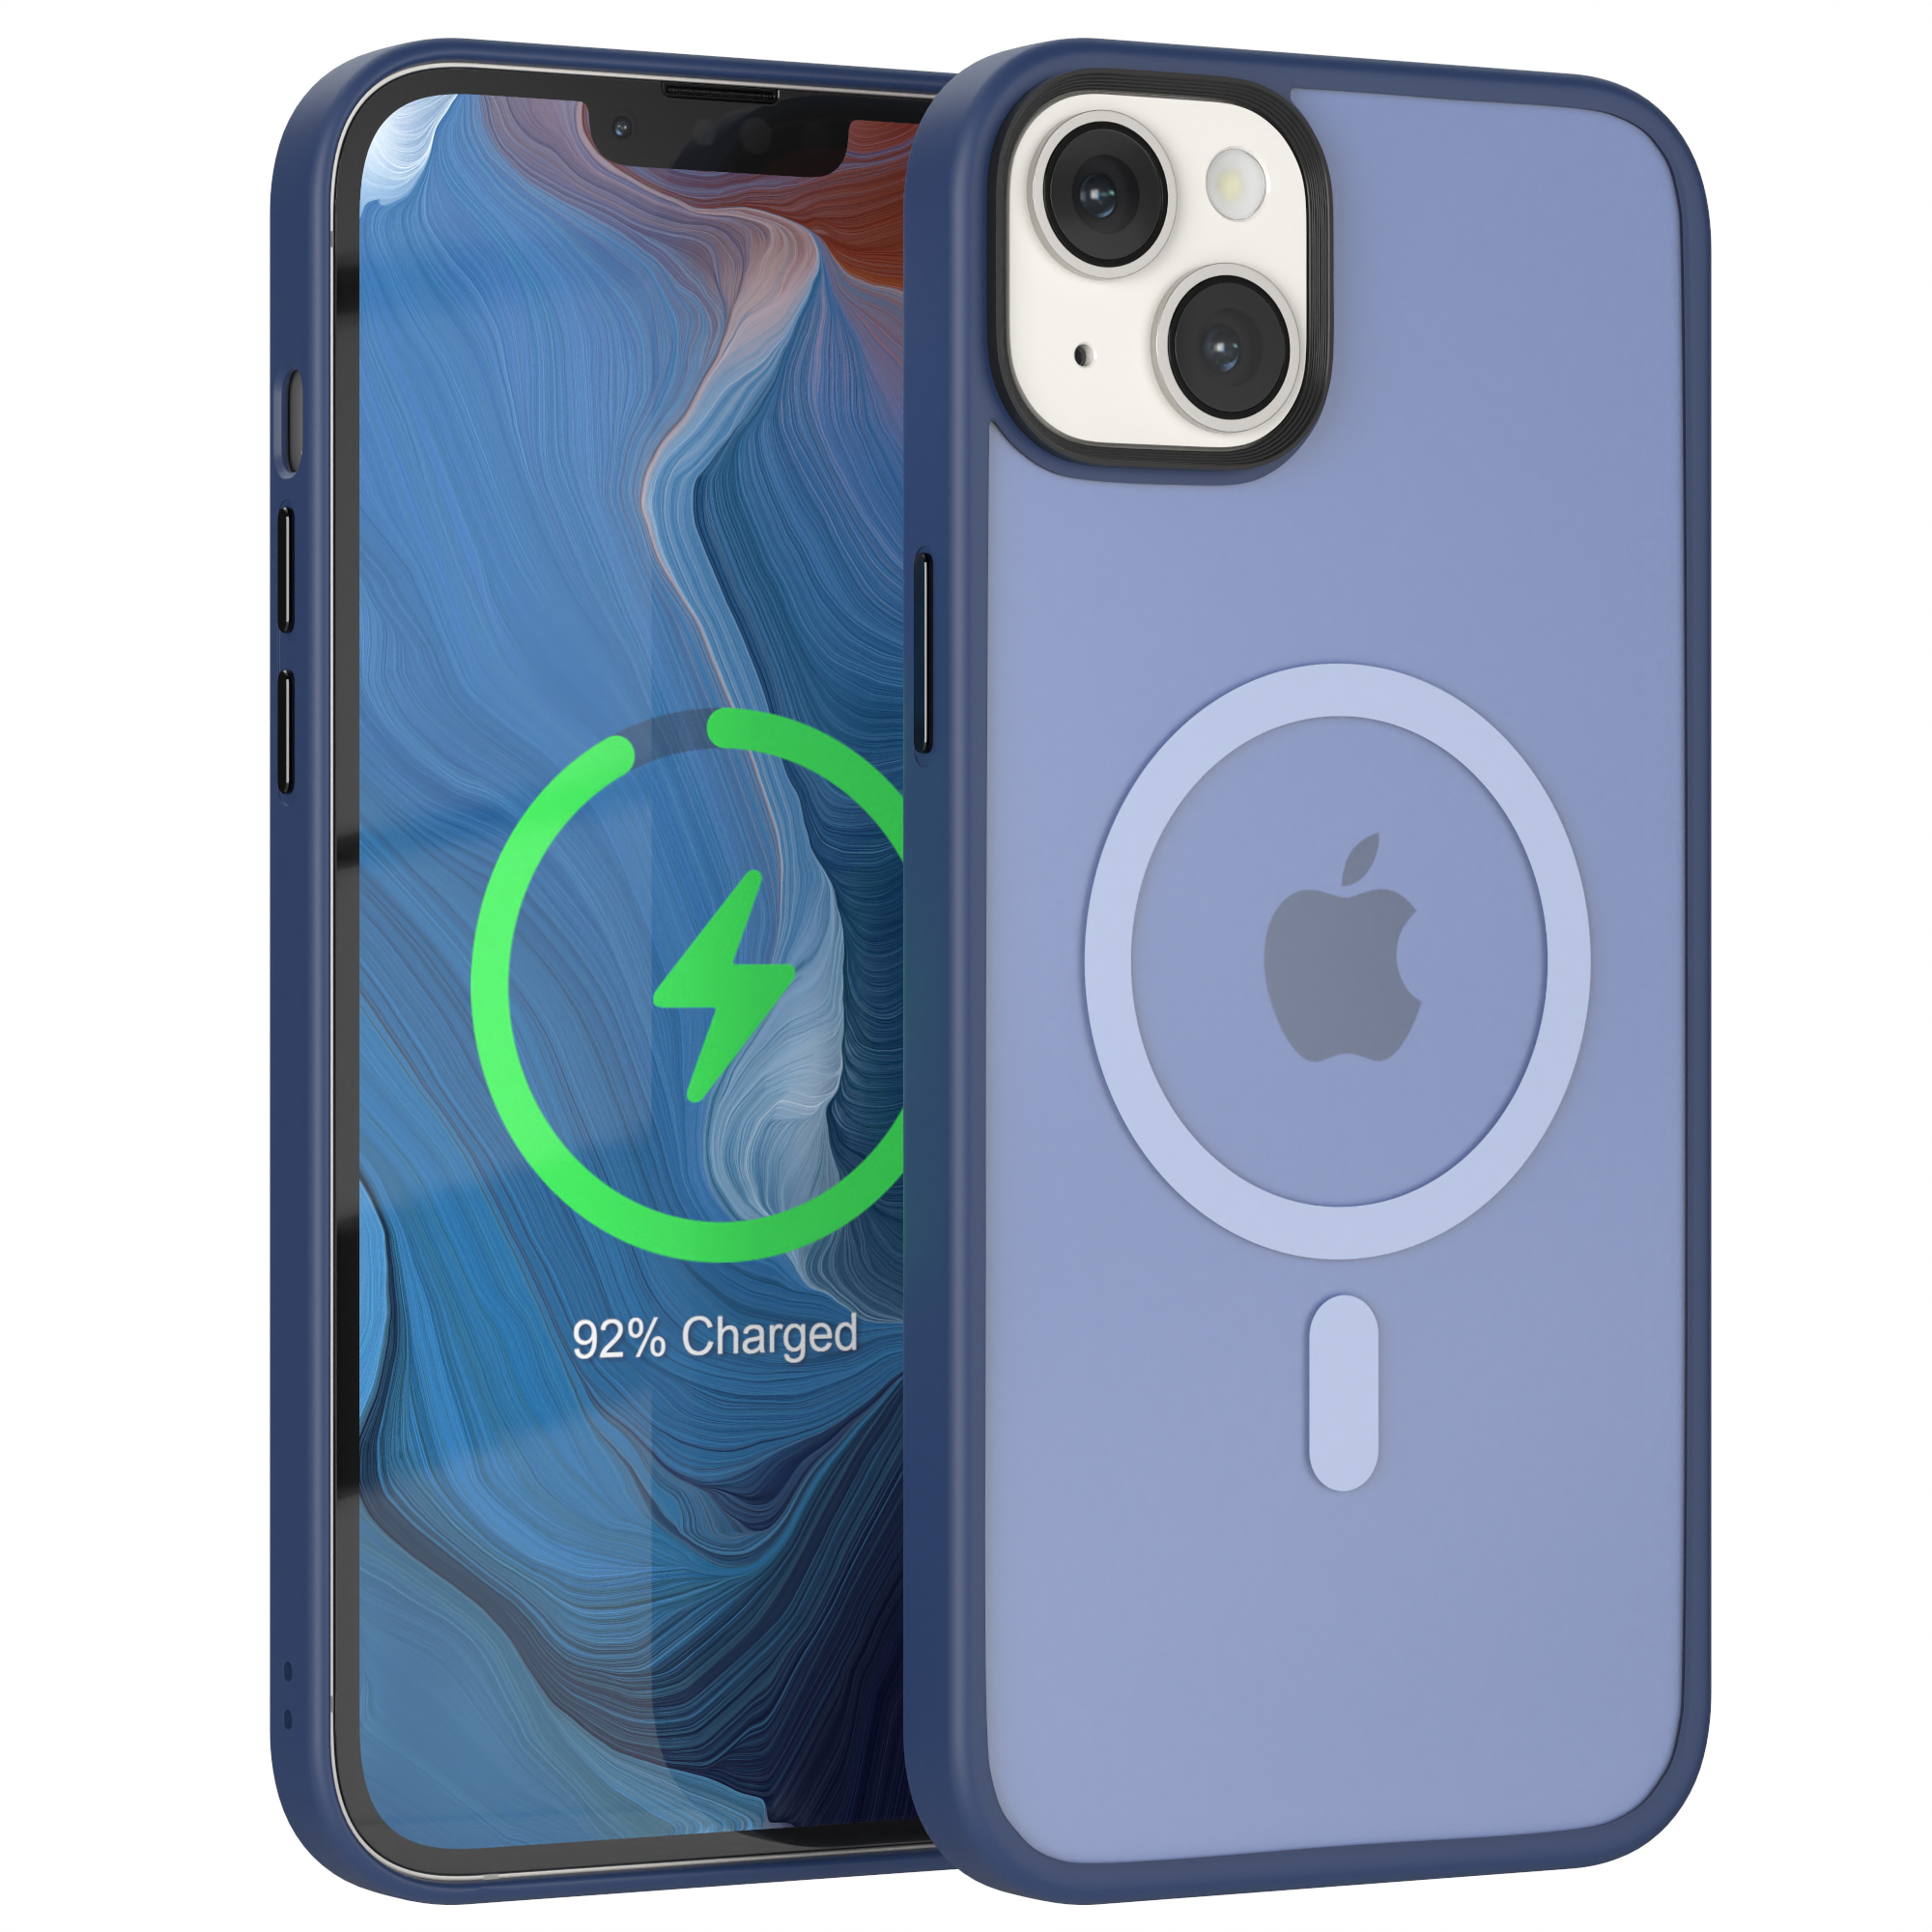 EAZY CASE Matt Outdoor Apple, 14 iPhone Plus, Dunkelblau mit MagSafe, Case Backcover